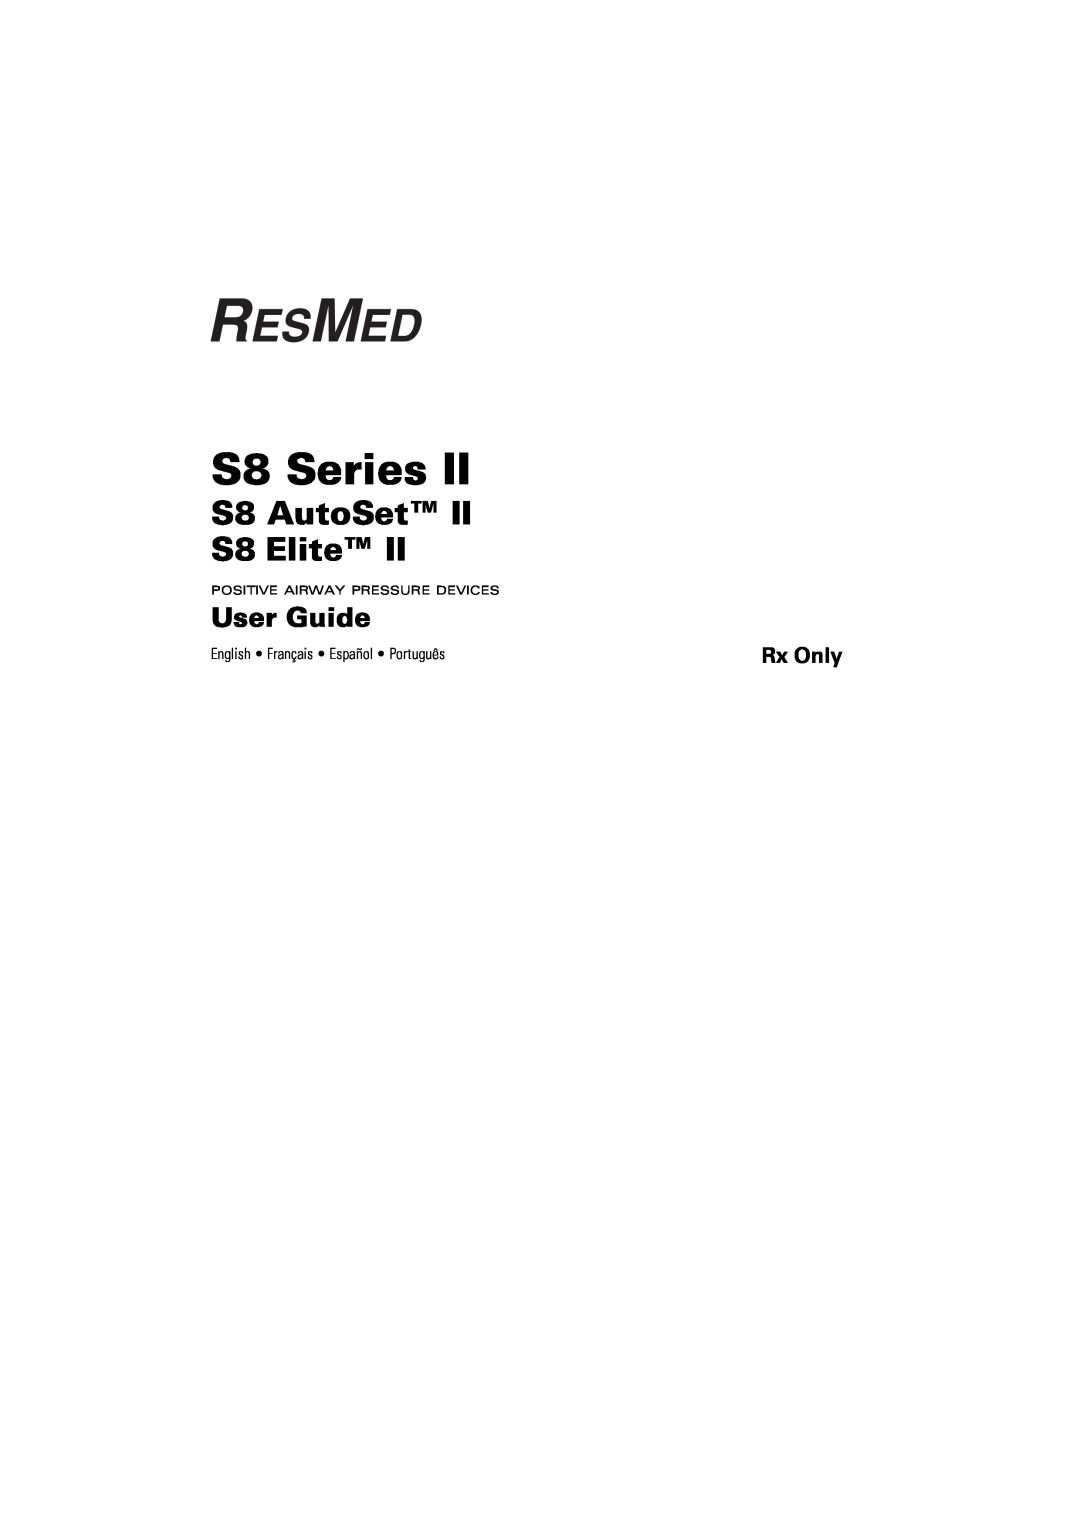 ResMed s8 manual S8 Lightweight, User Guide 